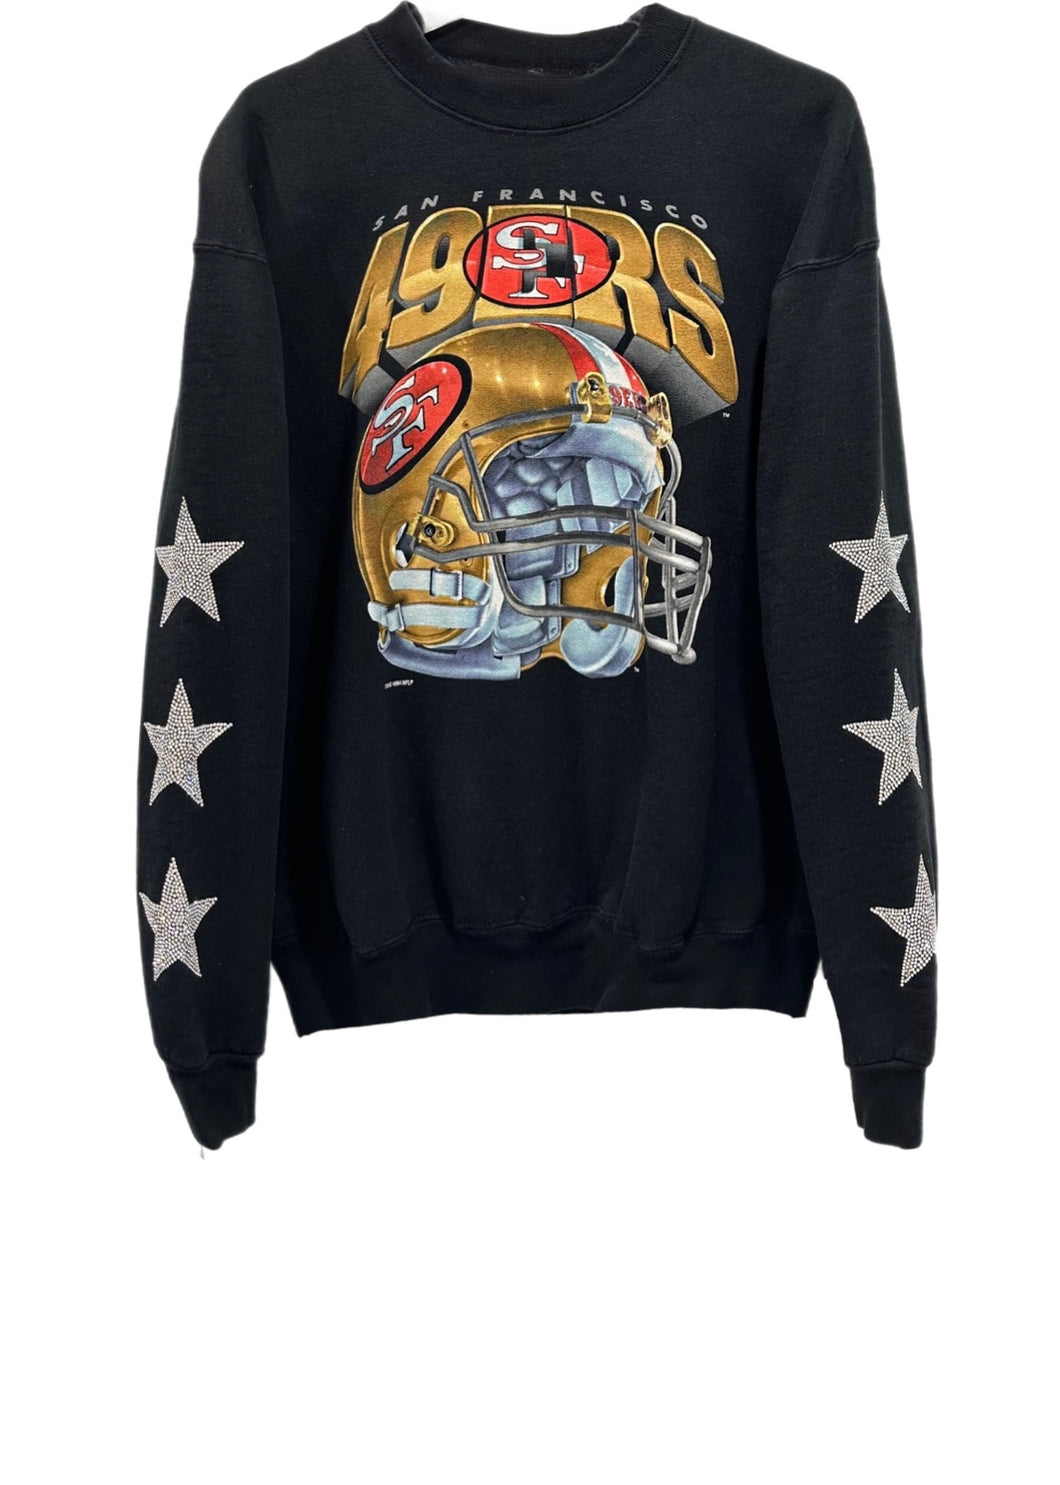 San Francisco 49ers, NFL One of a KIND Vintage Sweatshirt with Three Crystal Star Design